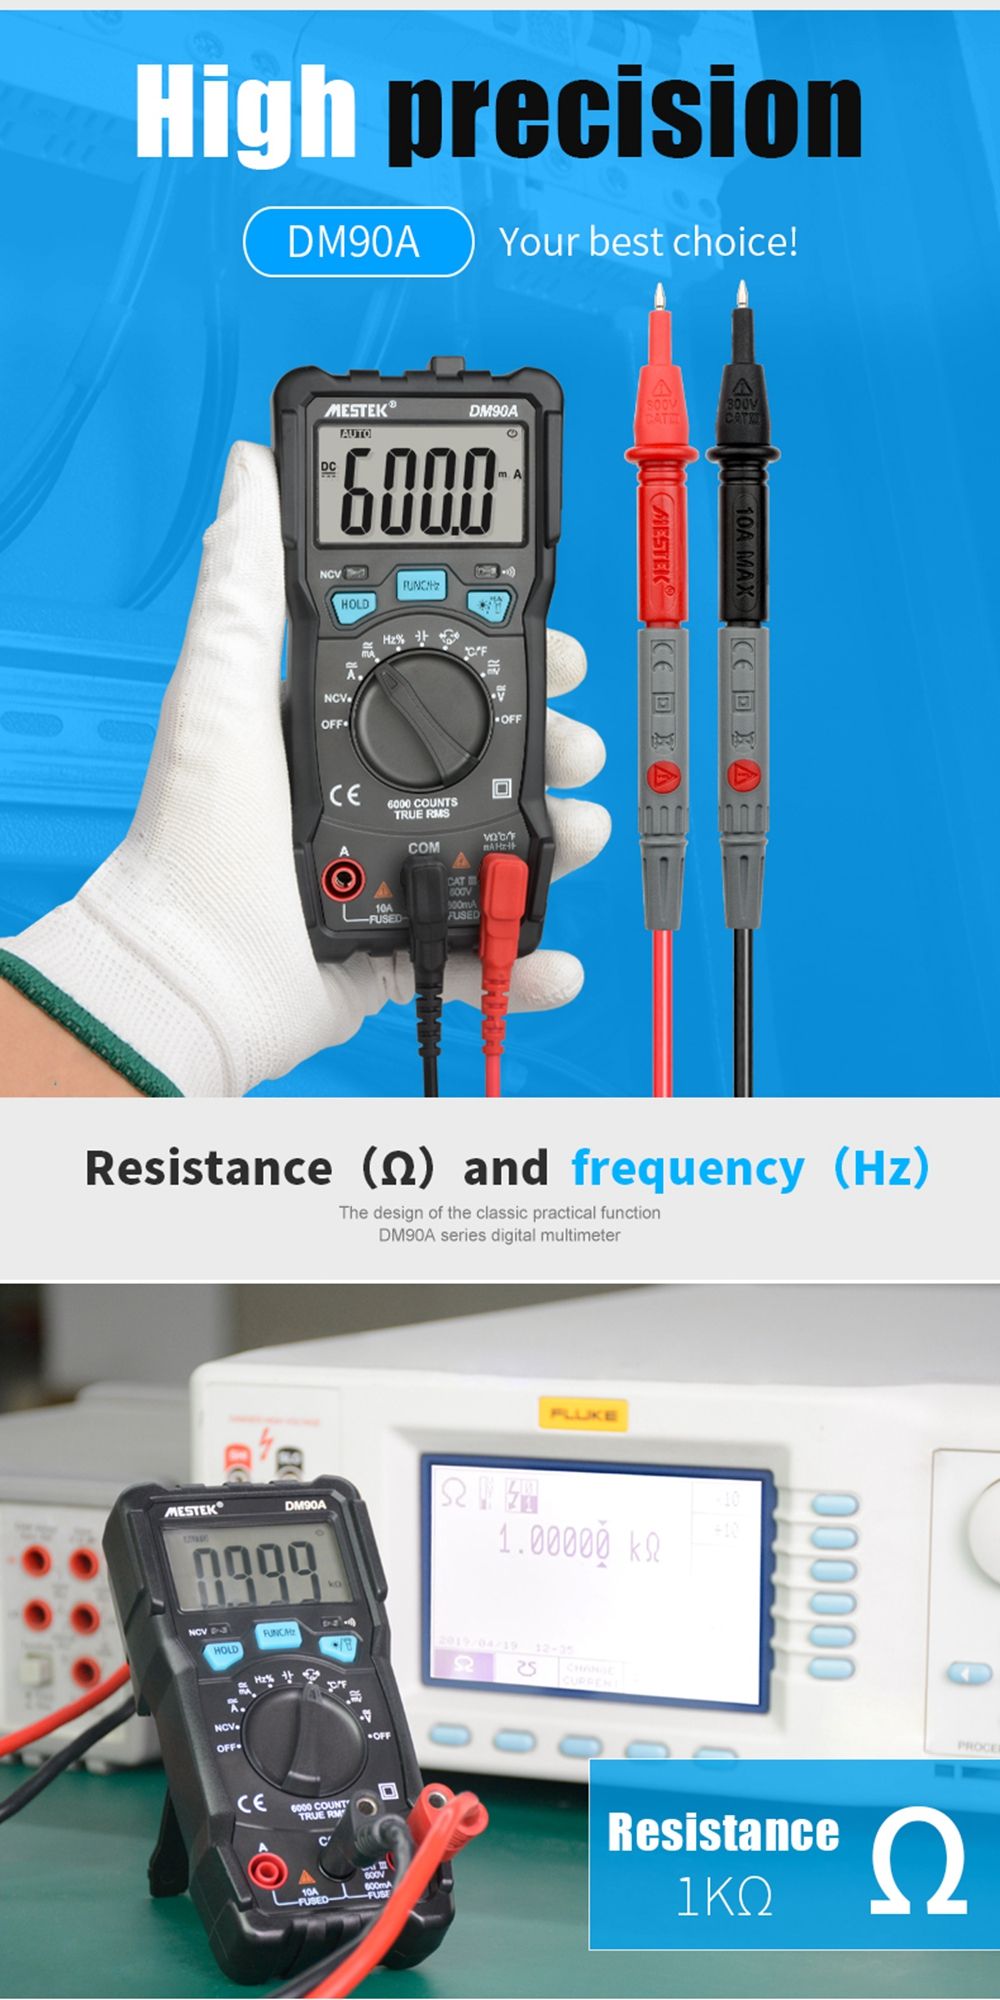 MESTEK-High-Precision-Multimeter-DM90A-6000-Counts-Auto-Ranging-Electrician-Digital-Voltage-Meter-Fl-1533409